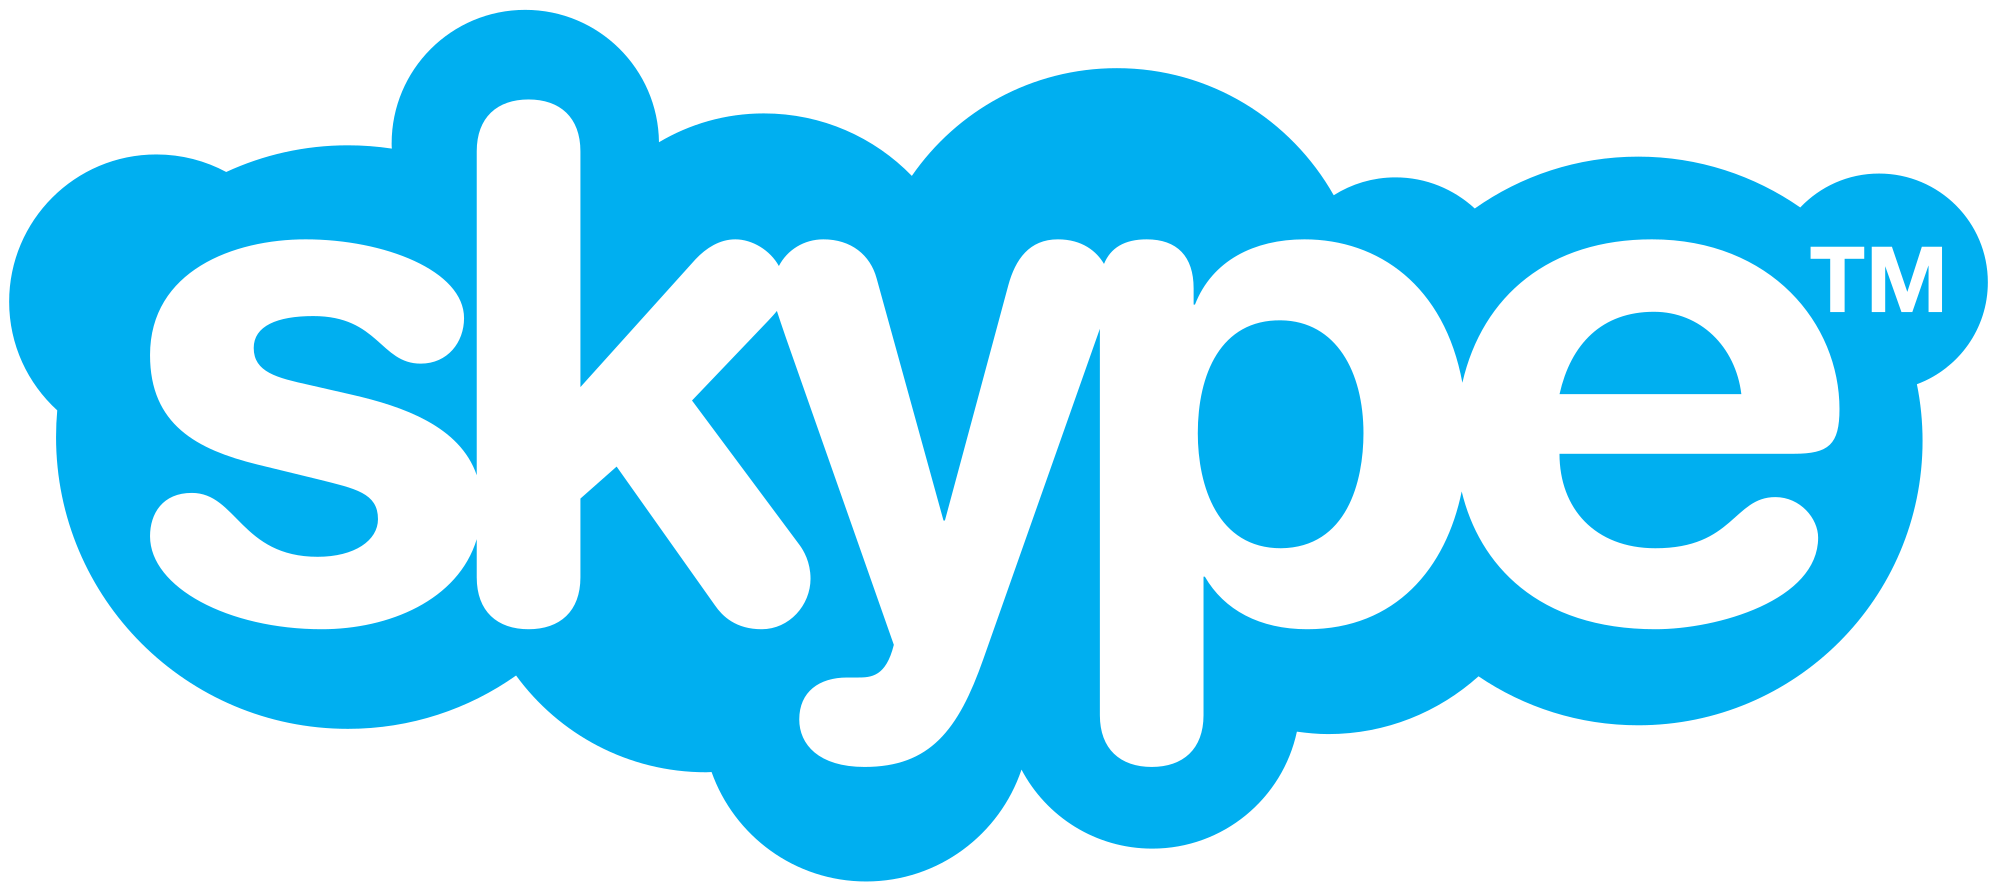 Current Skype Logo - File:Skype logo.svg - Wikimedia Commons